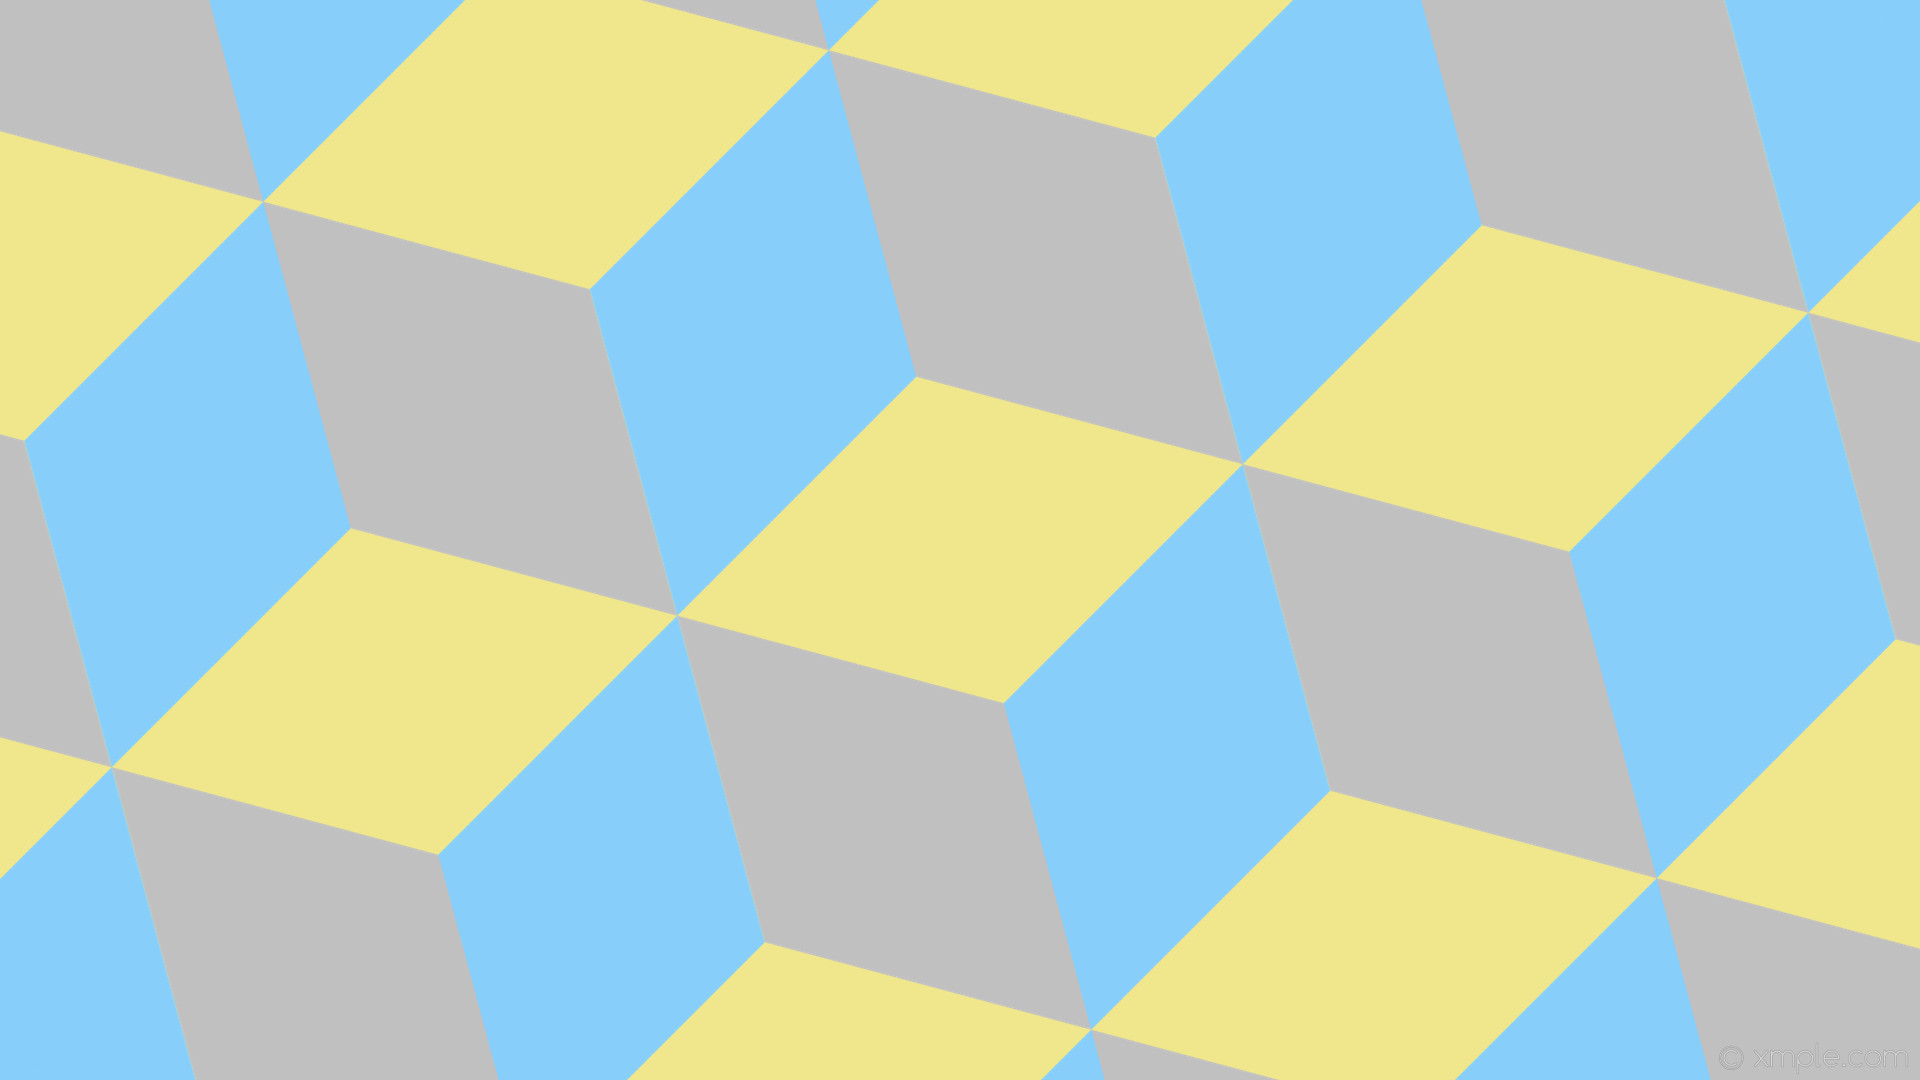 1920x1080 wallpaper blue grey yellow 3d cubes khaki silver light sky blue #f0e68c  #c0c0c0 #